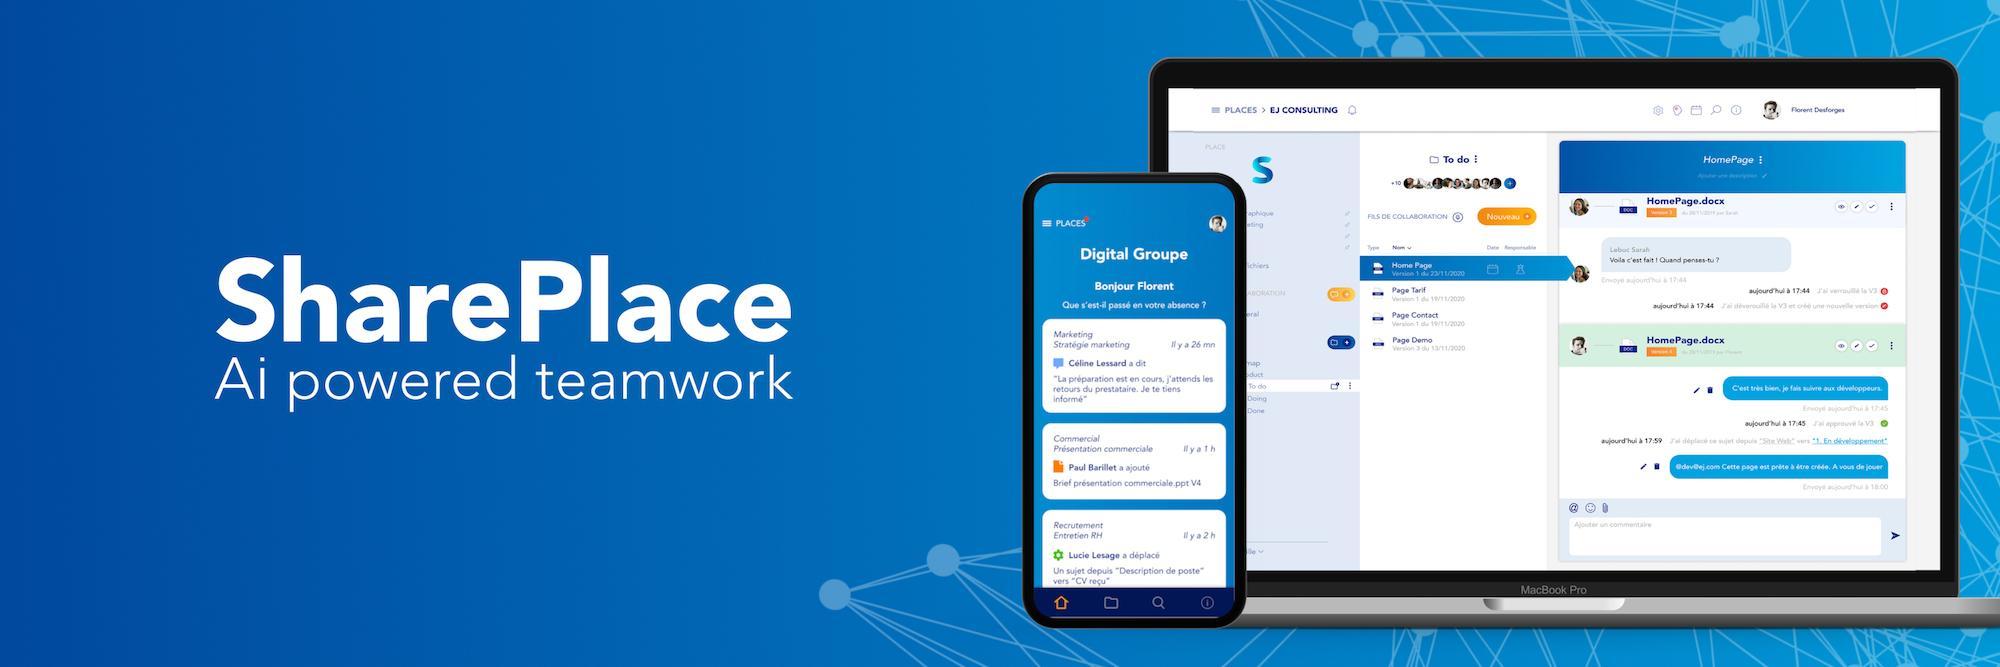 Review SharePlace: 1st Collaborative Work Platform based on AI - Appvizer